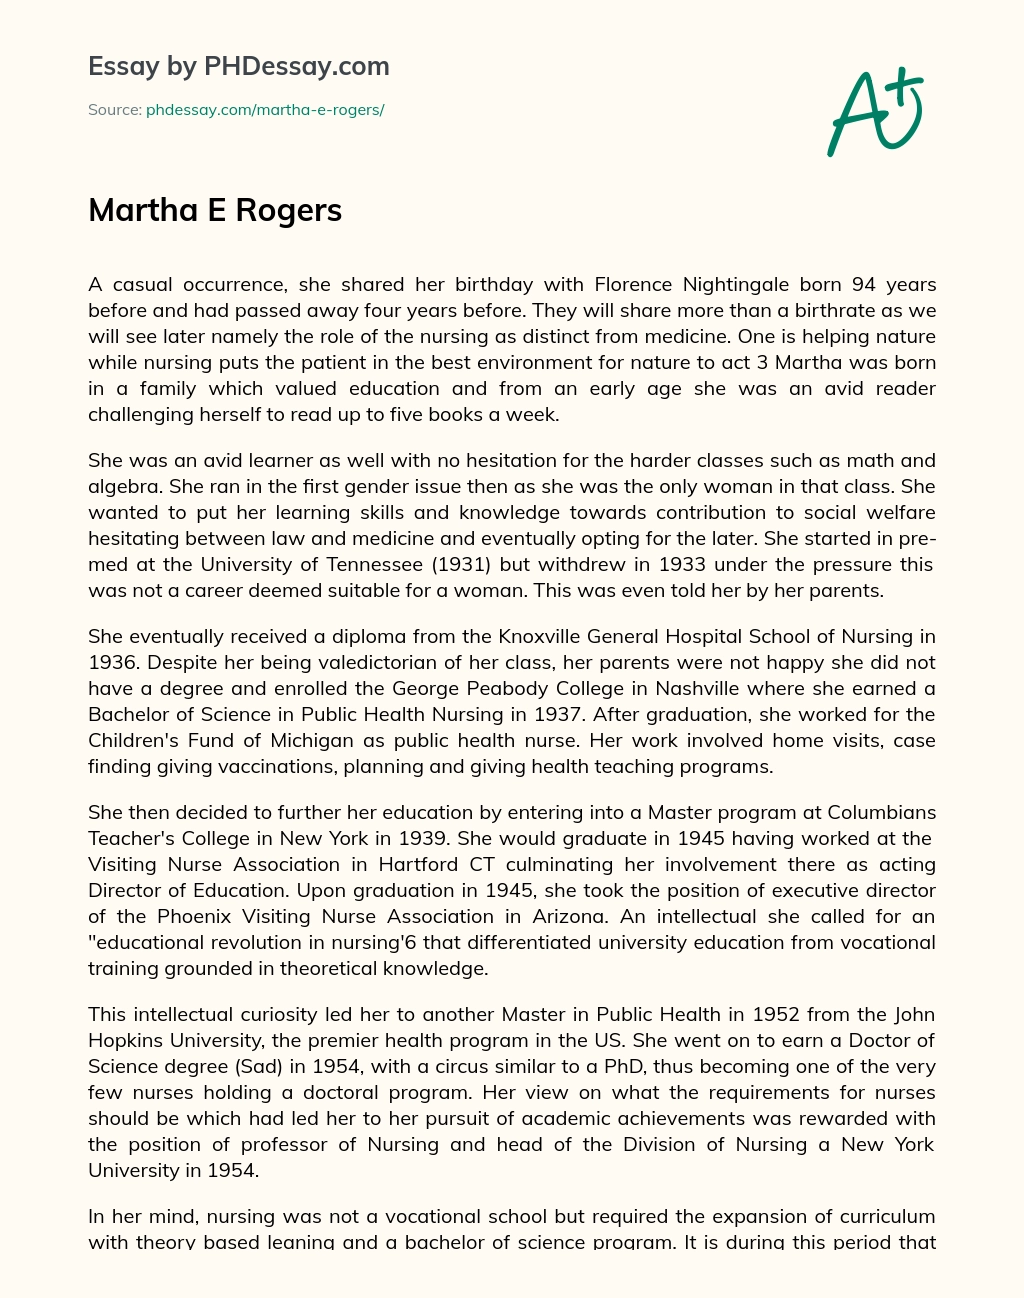 Martha E Rogers essay